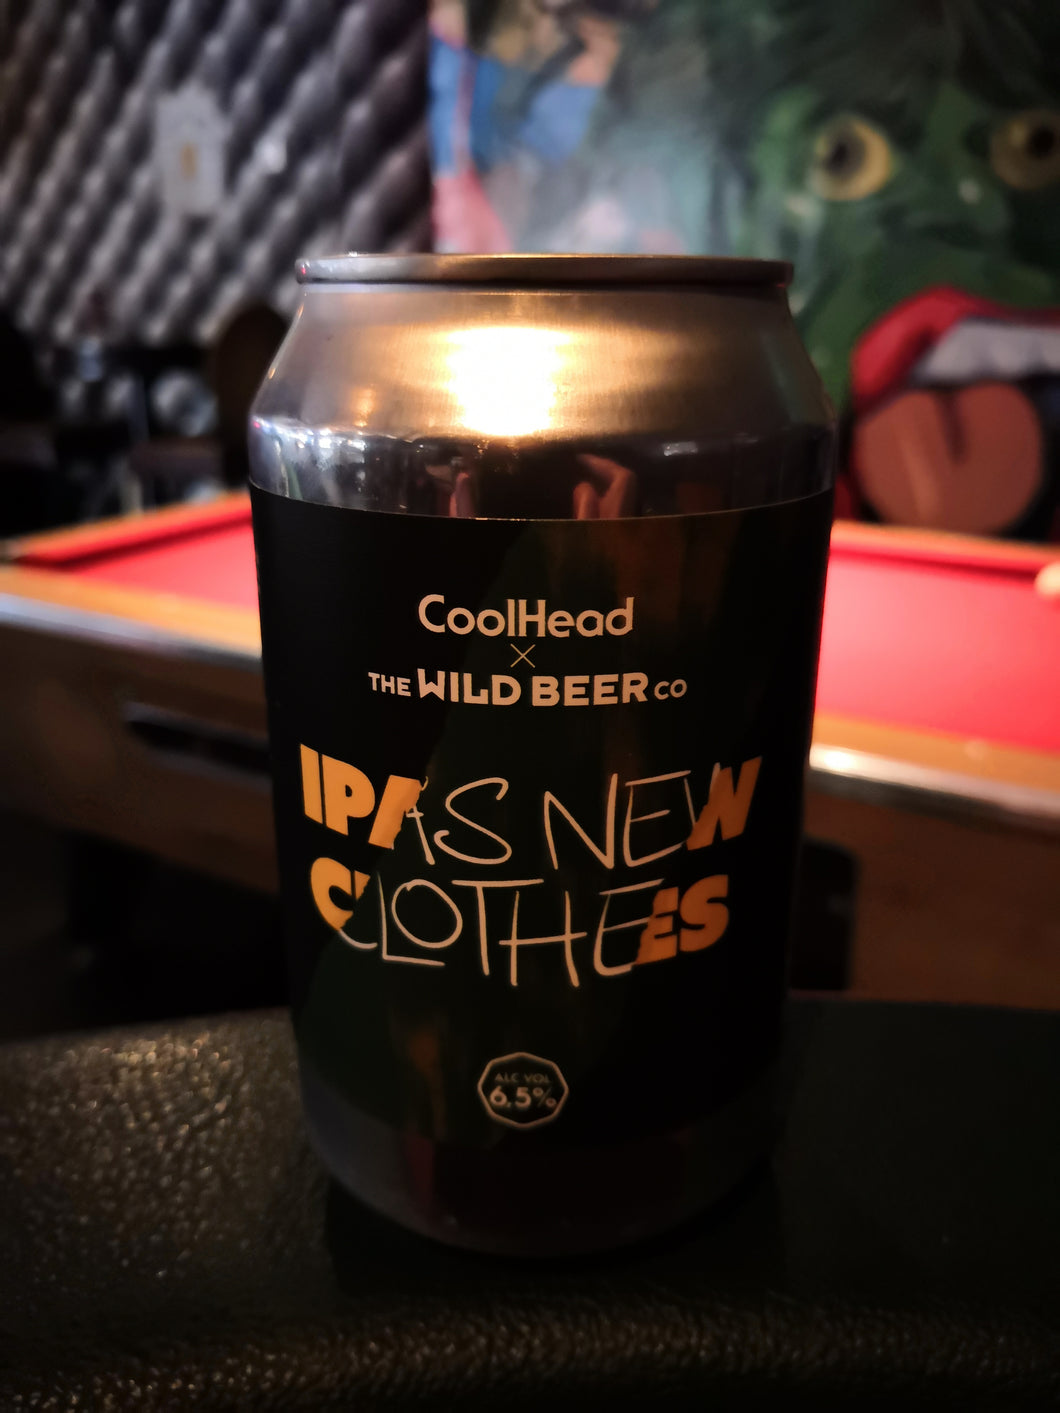 CoolHead / Wild Beer Co. IPA's New Clothes Foggy Kveik IPA